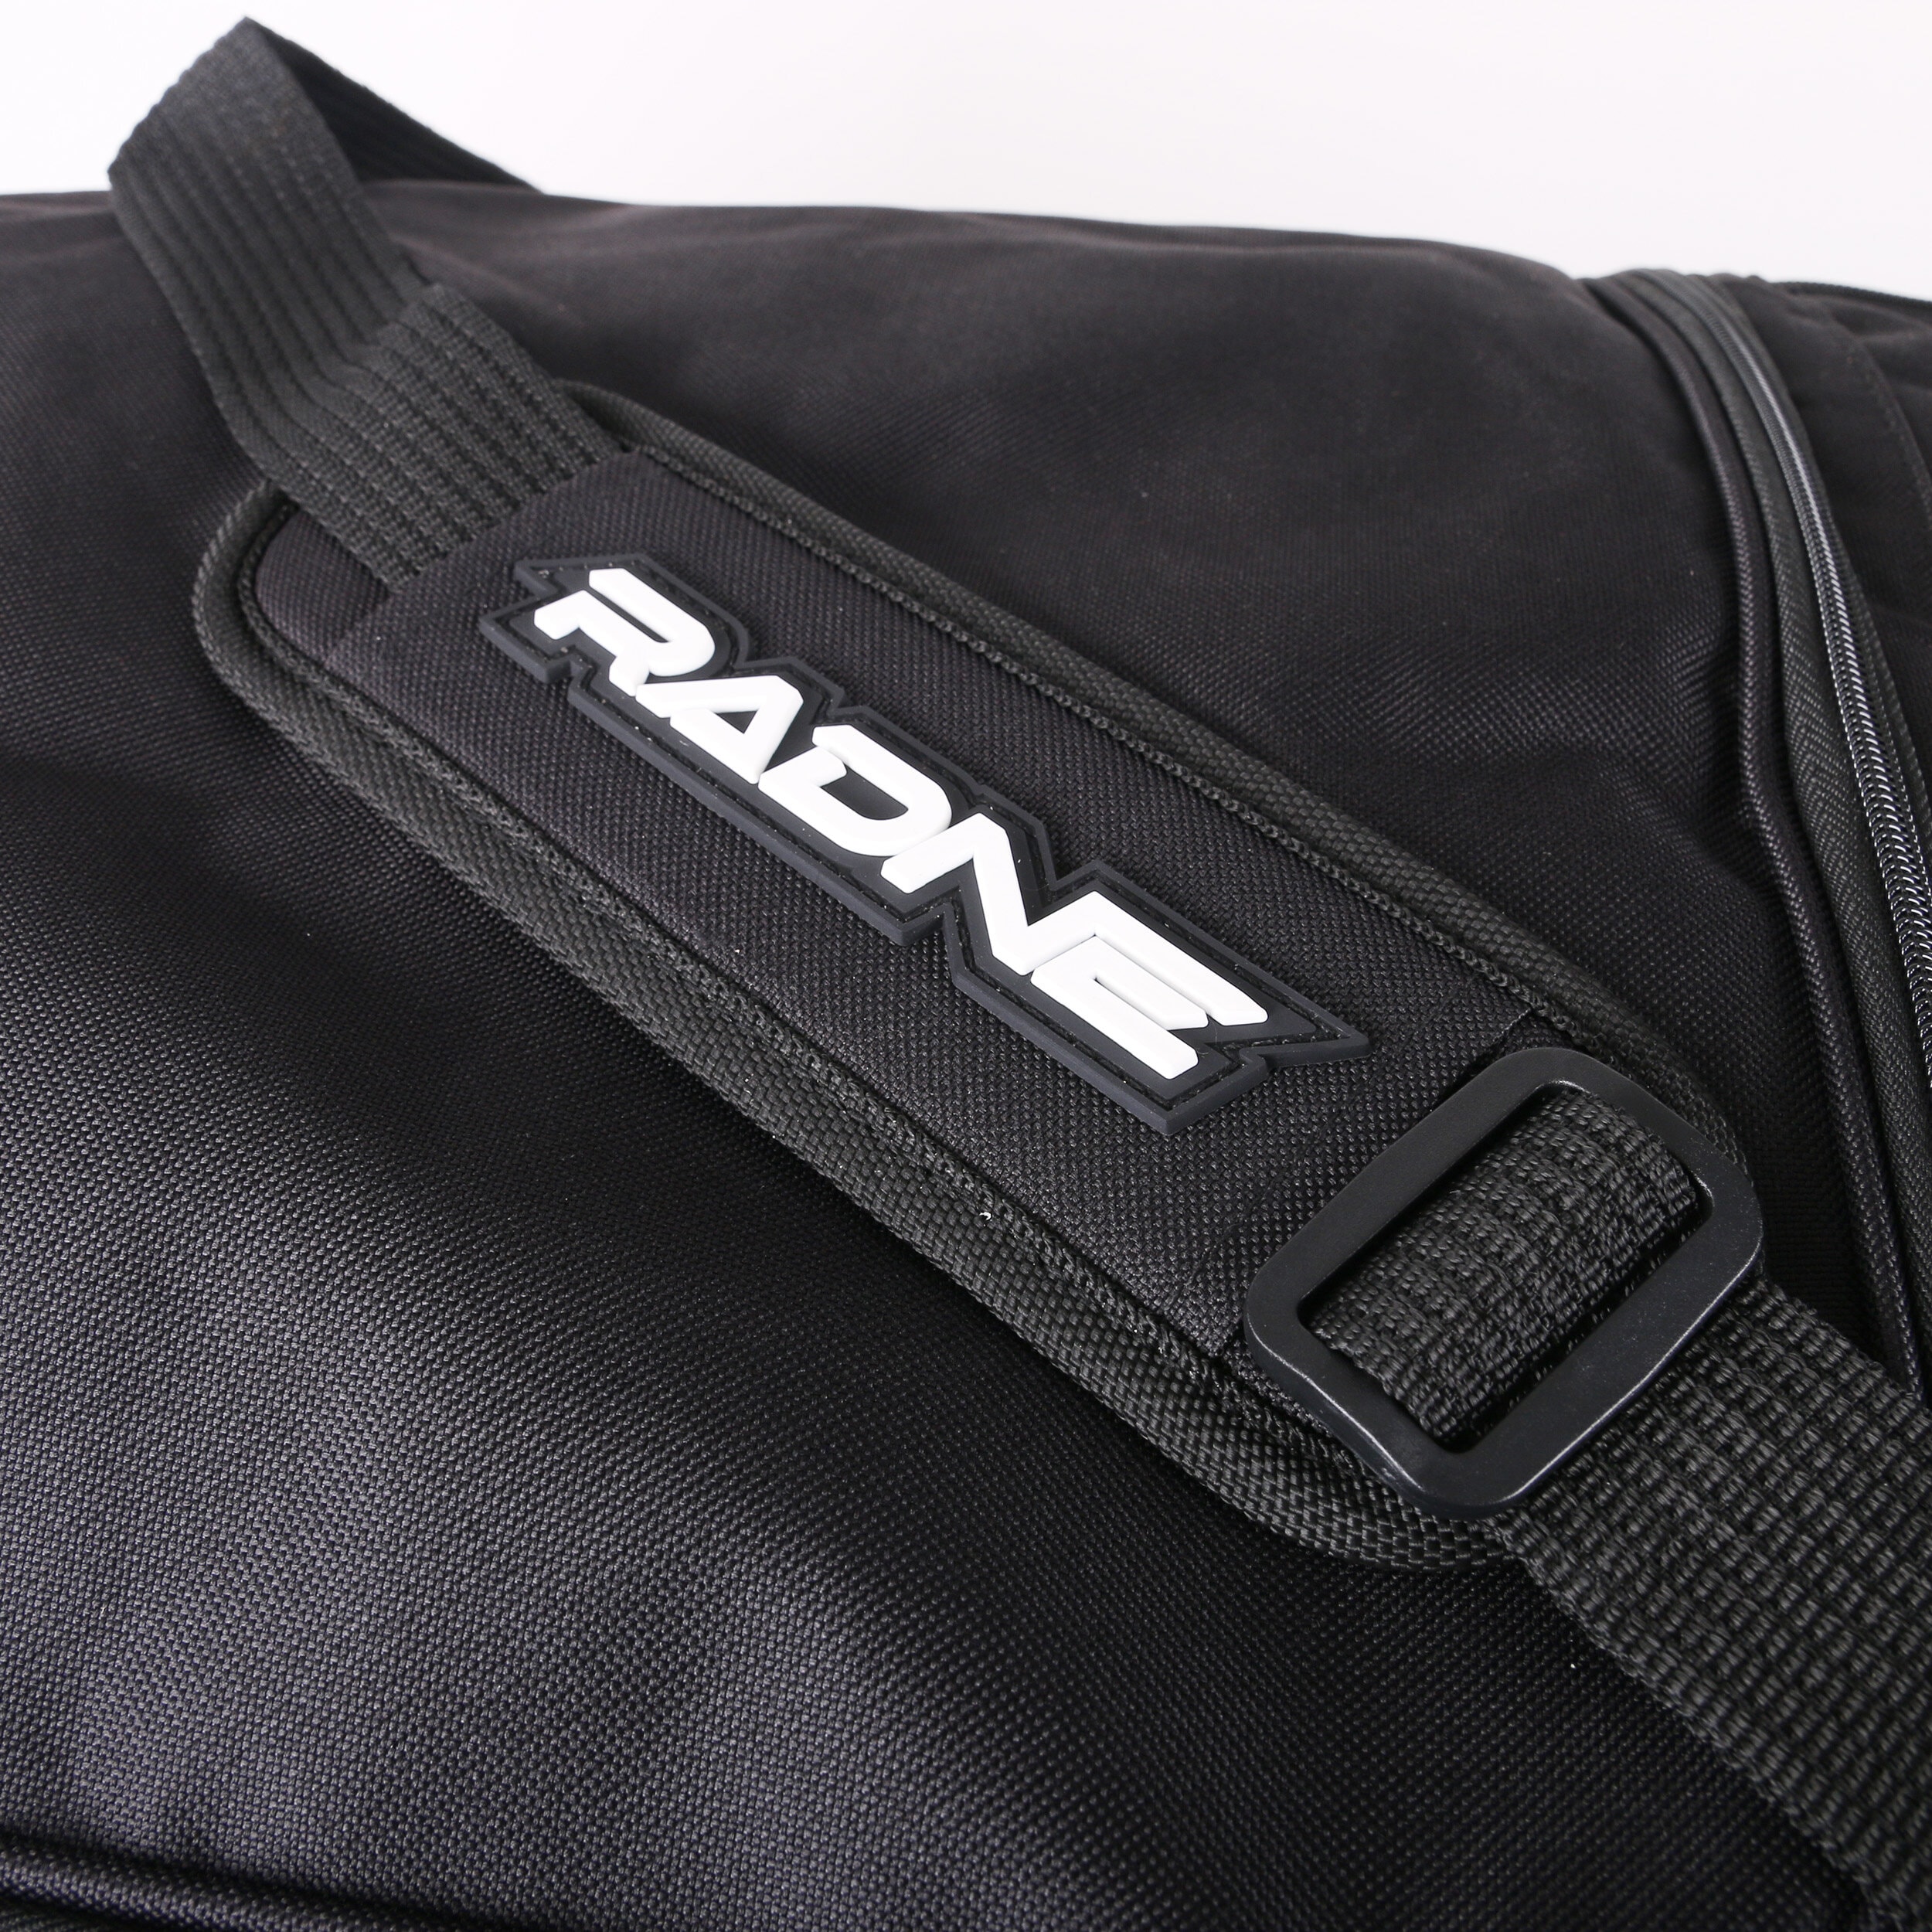 Radne Gear Bag